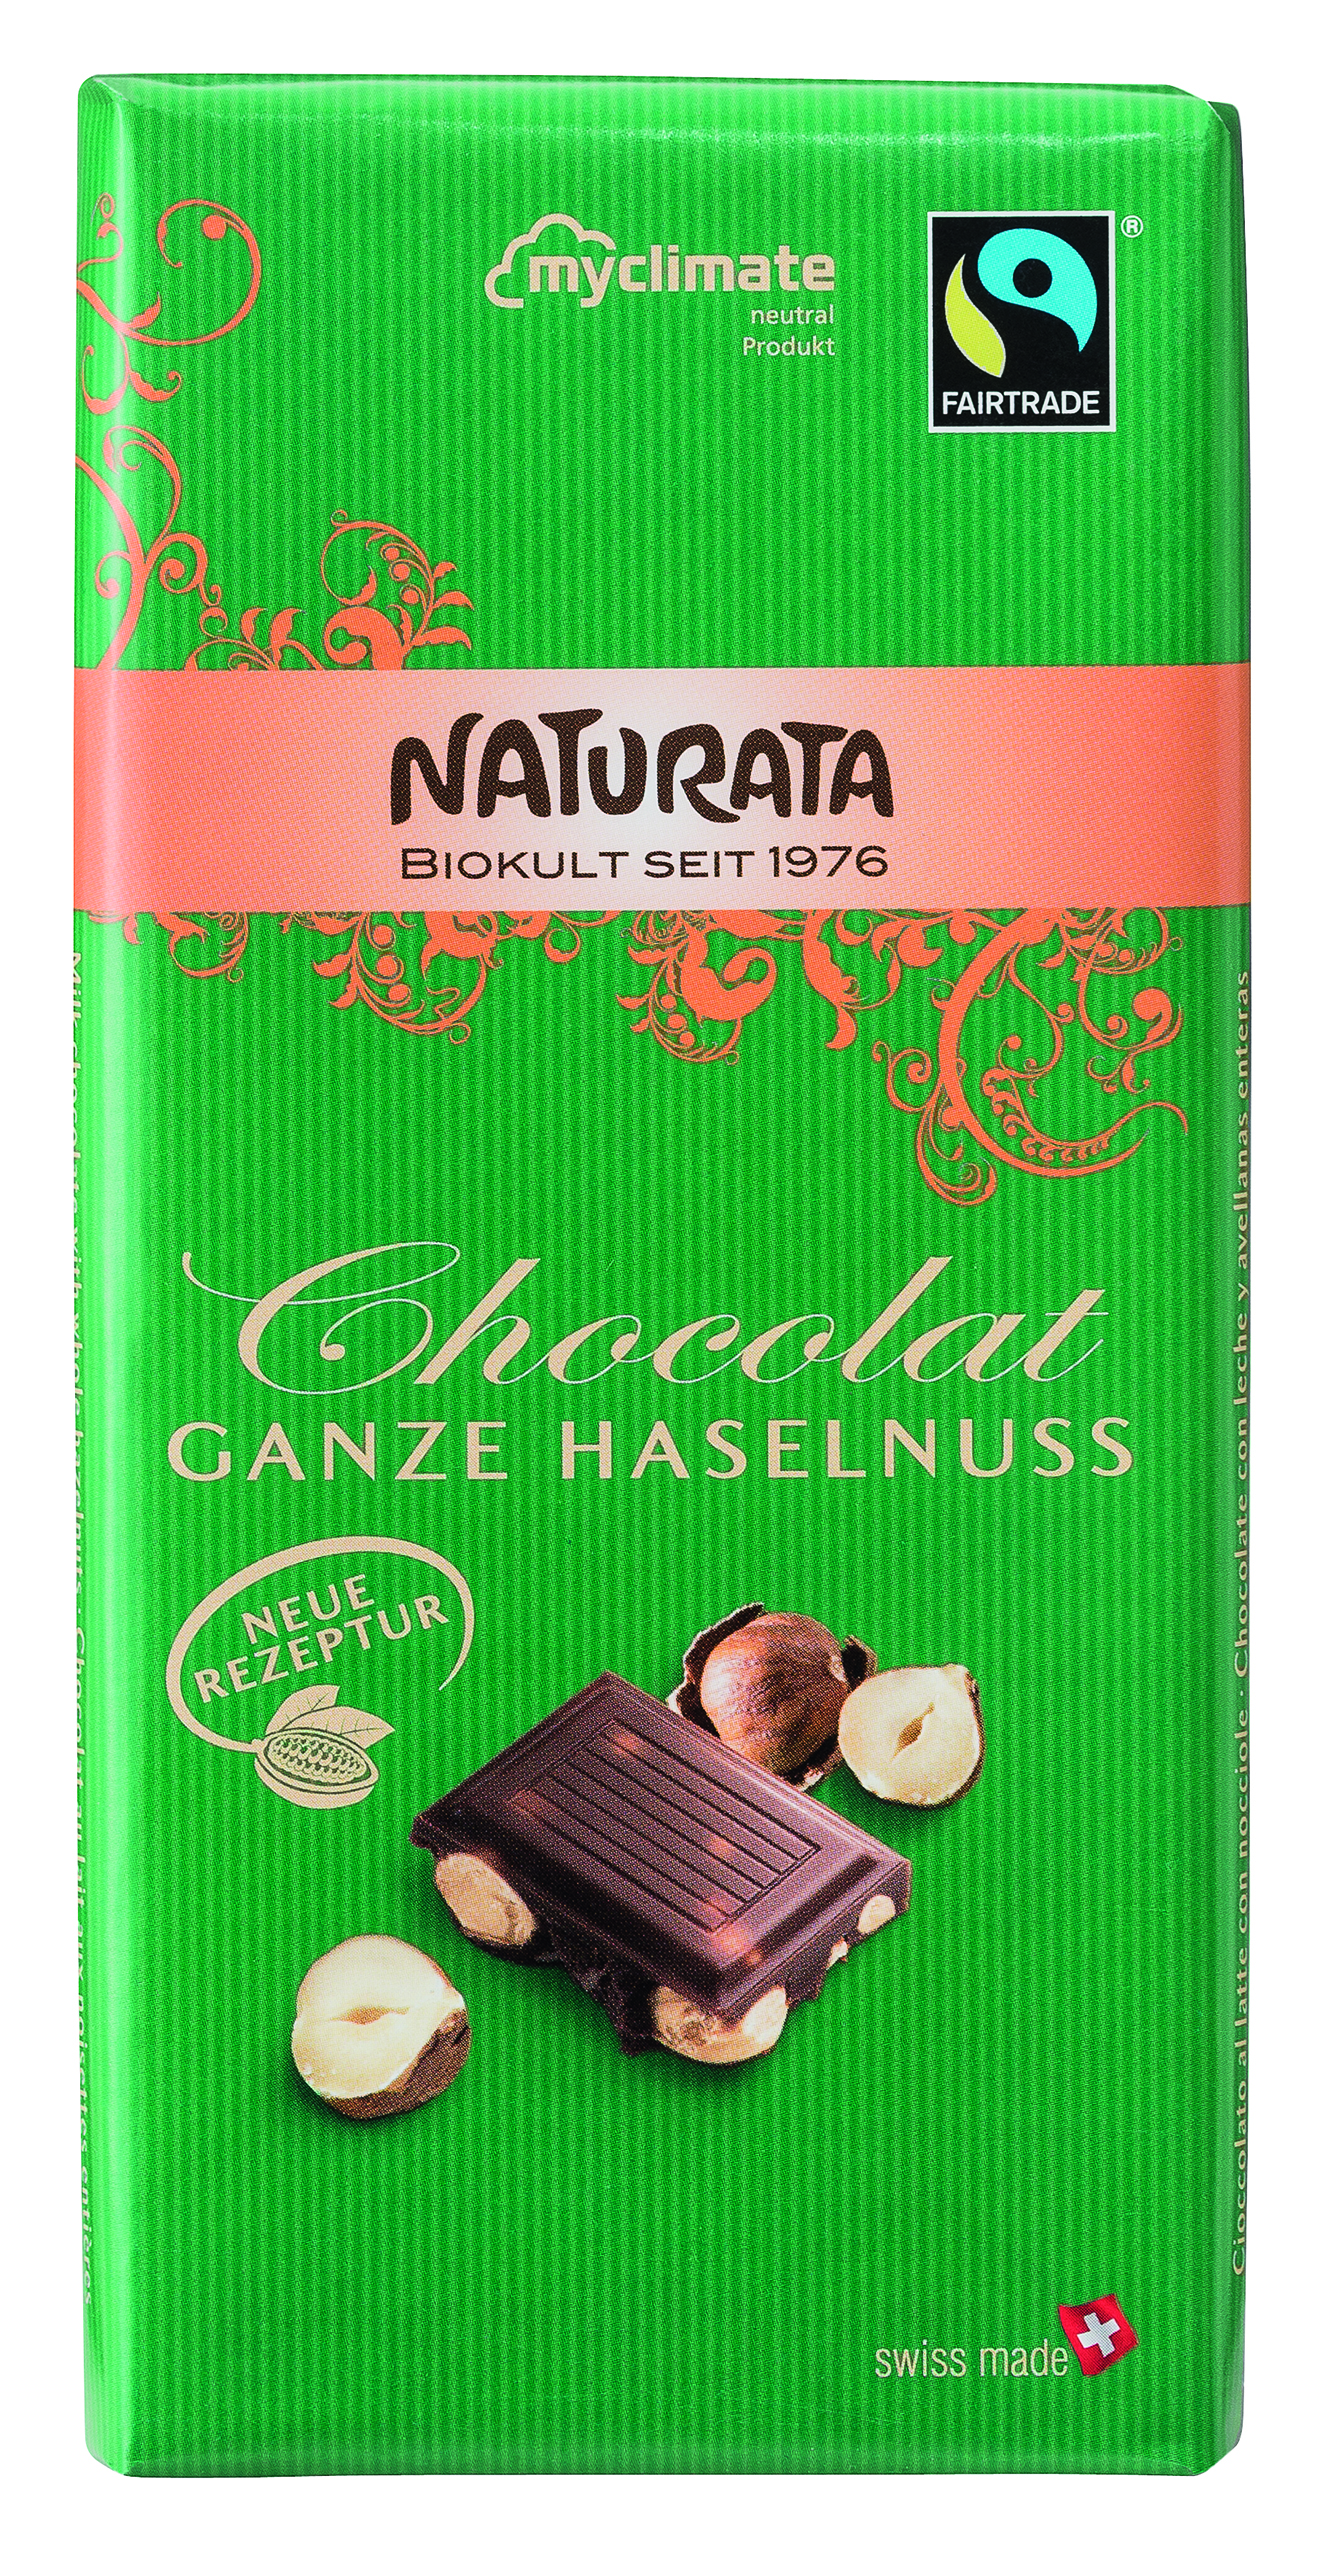 Naturata Chocolat Ganze Haselnuss-